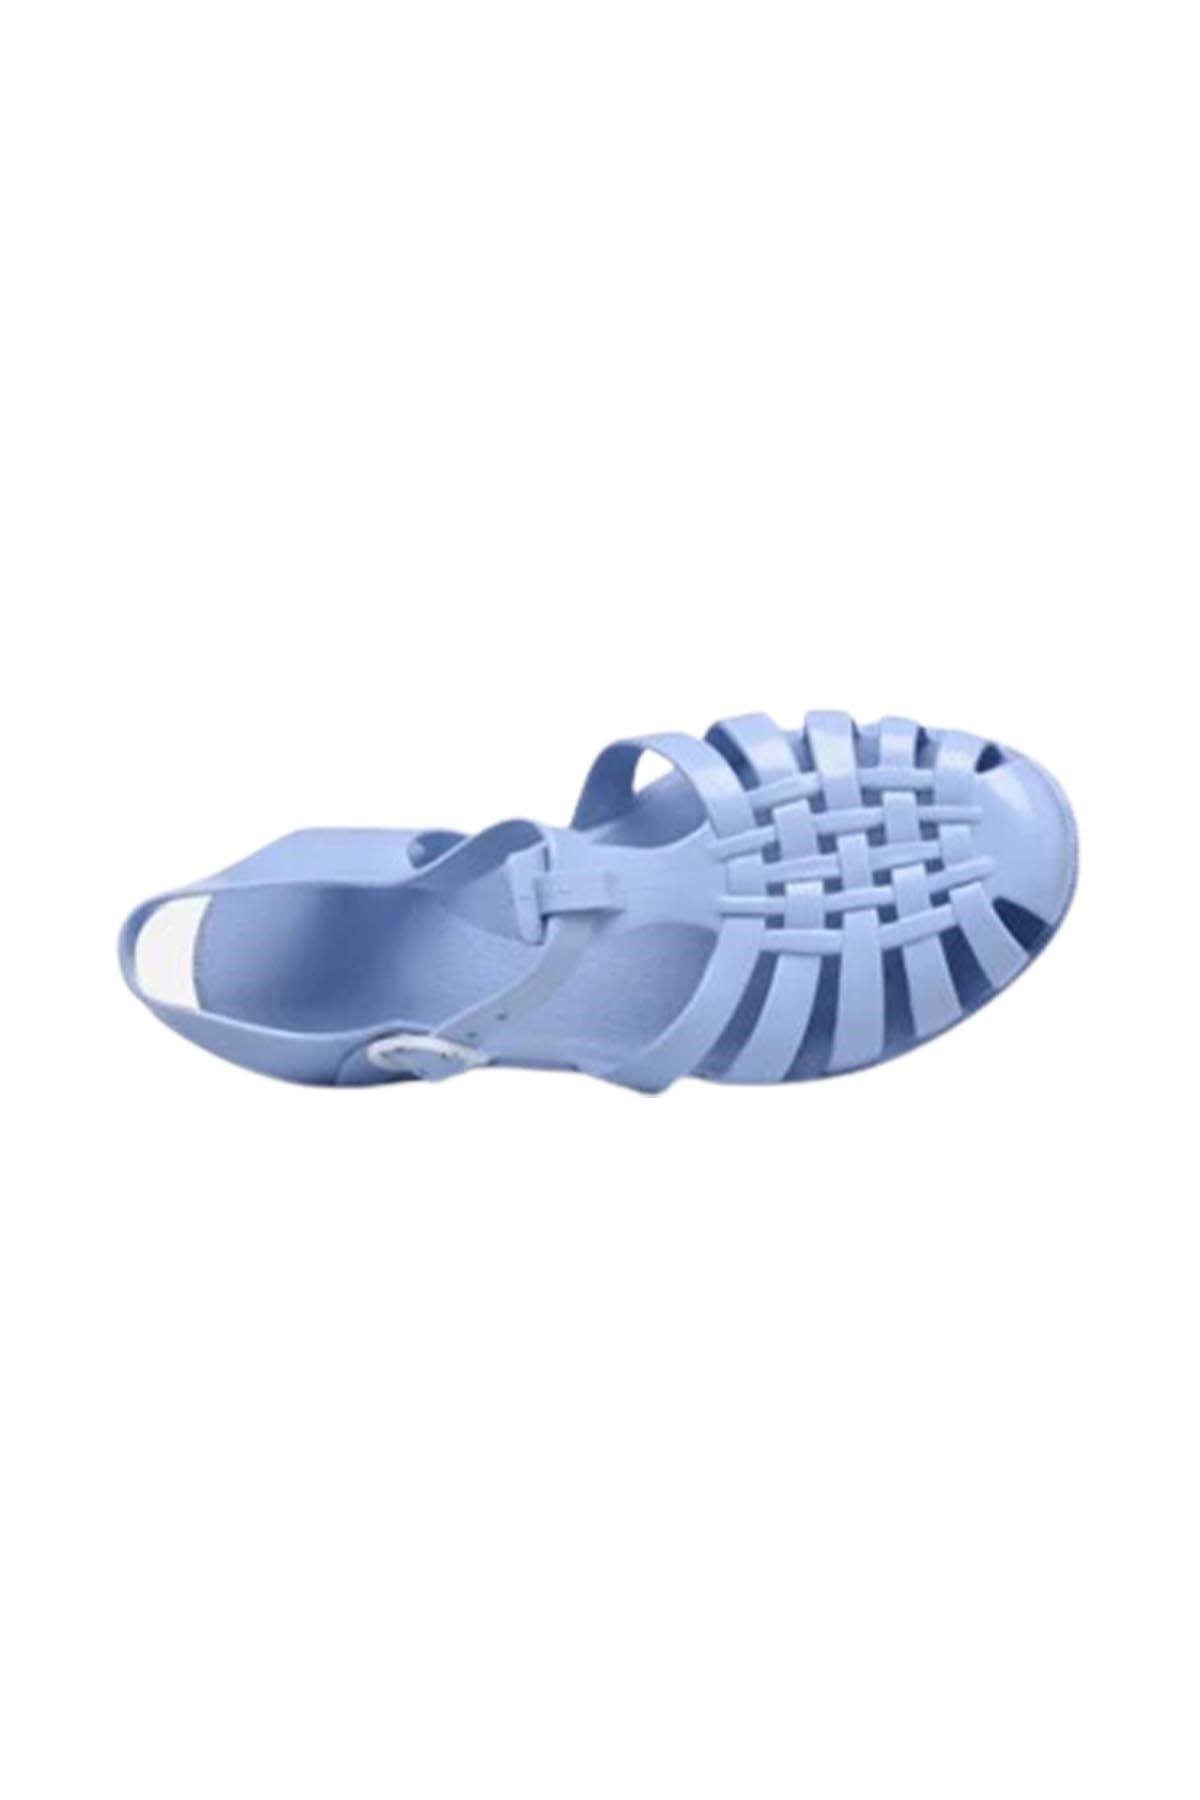 Meduse Sun Yetişkin Sandalet Blue Pastel No: 36-39